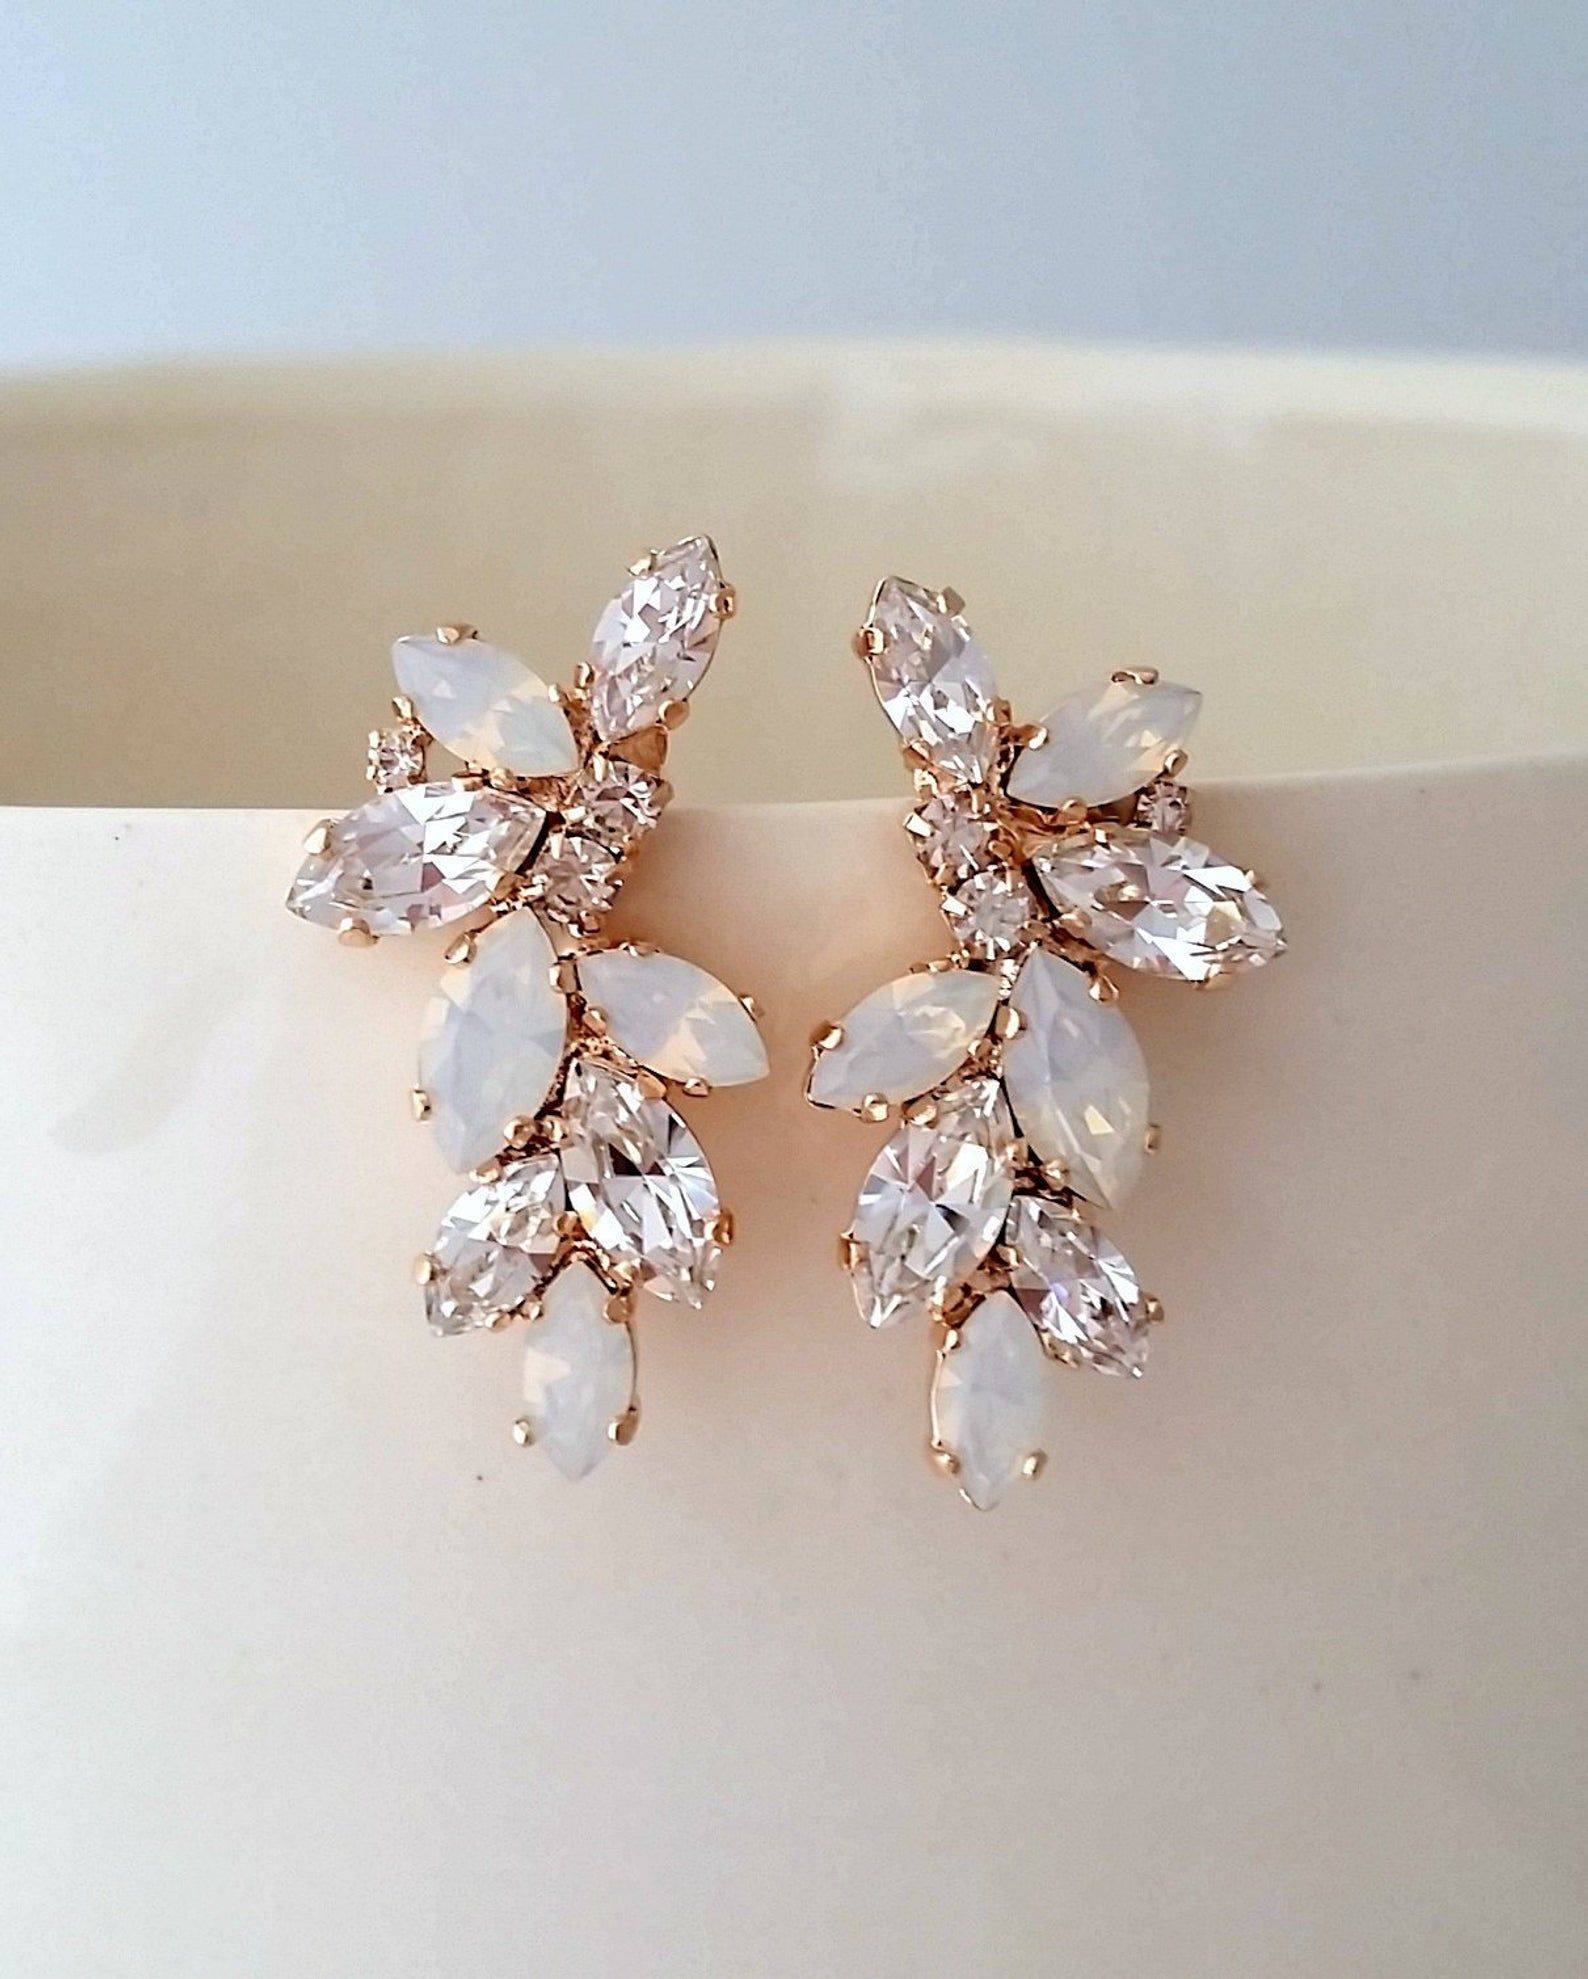 Bridal earrings stud,Opal Crystal earrings,Opal Wedding jewelry,White opal earrings,Bridesmaid earrings,Cluster earring,Swarovski earrings